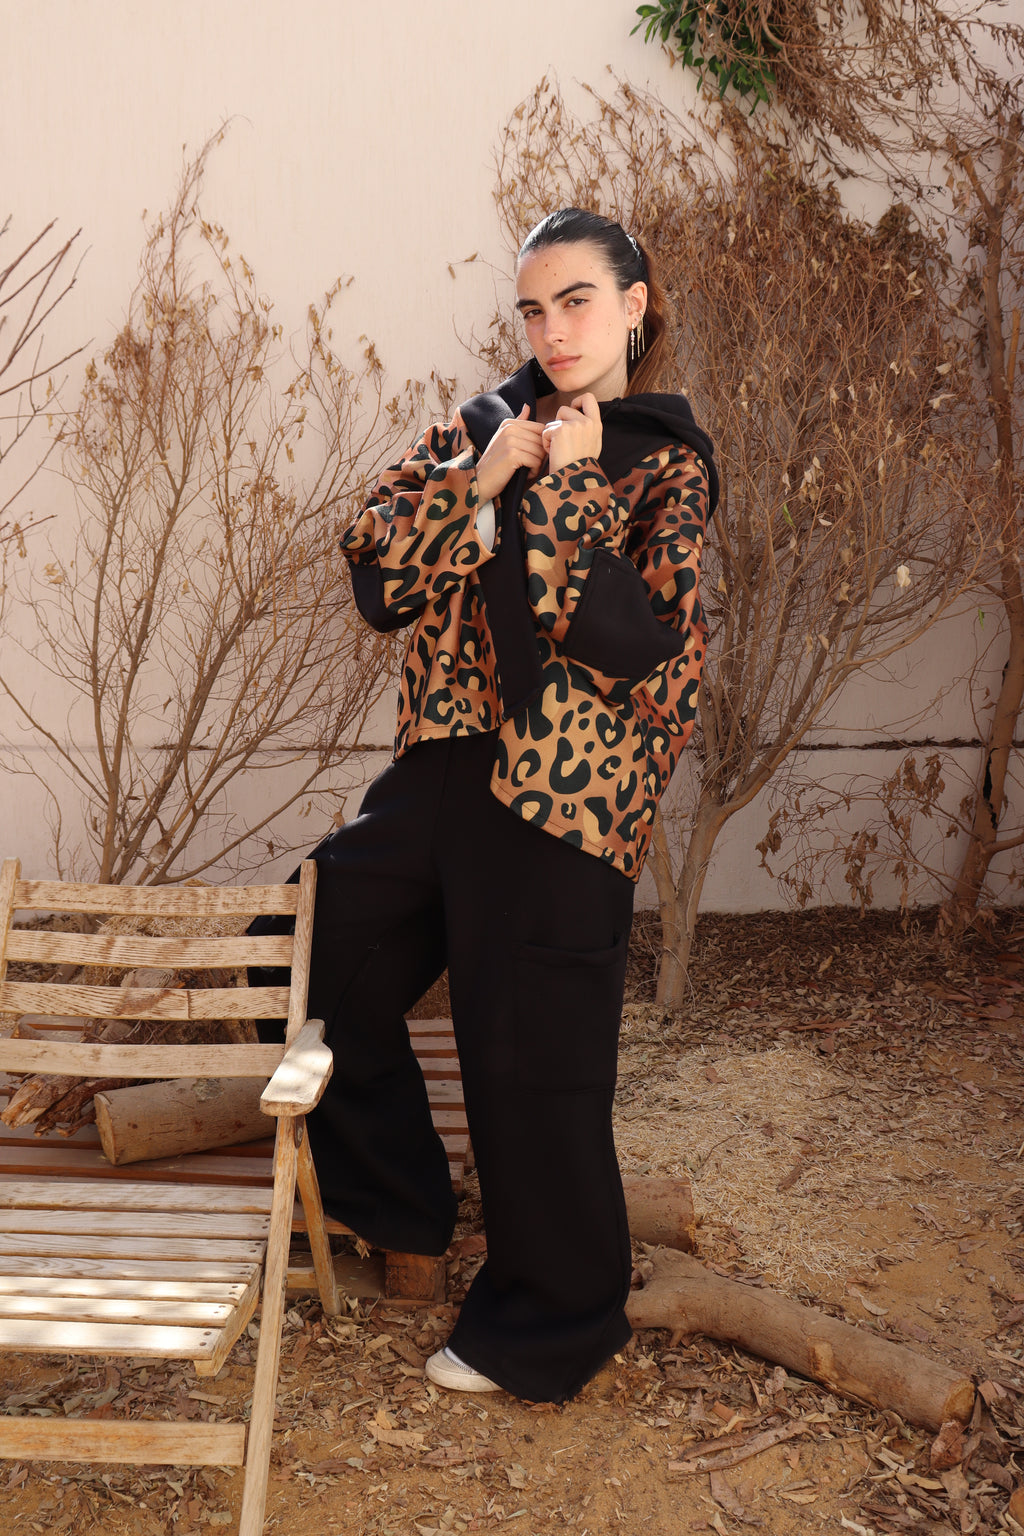 Leopard hooded jacket & pants